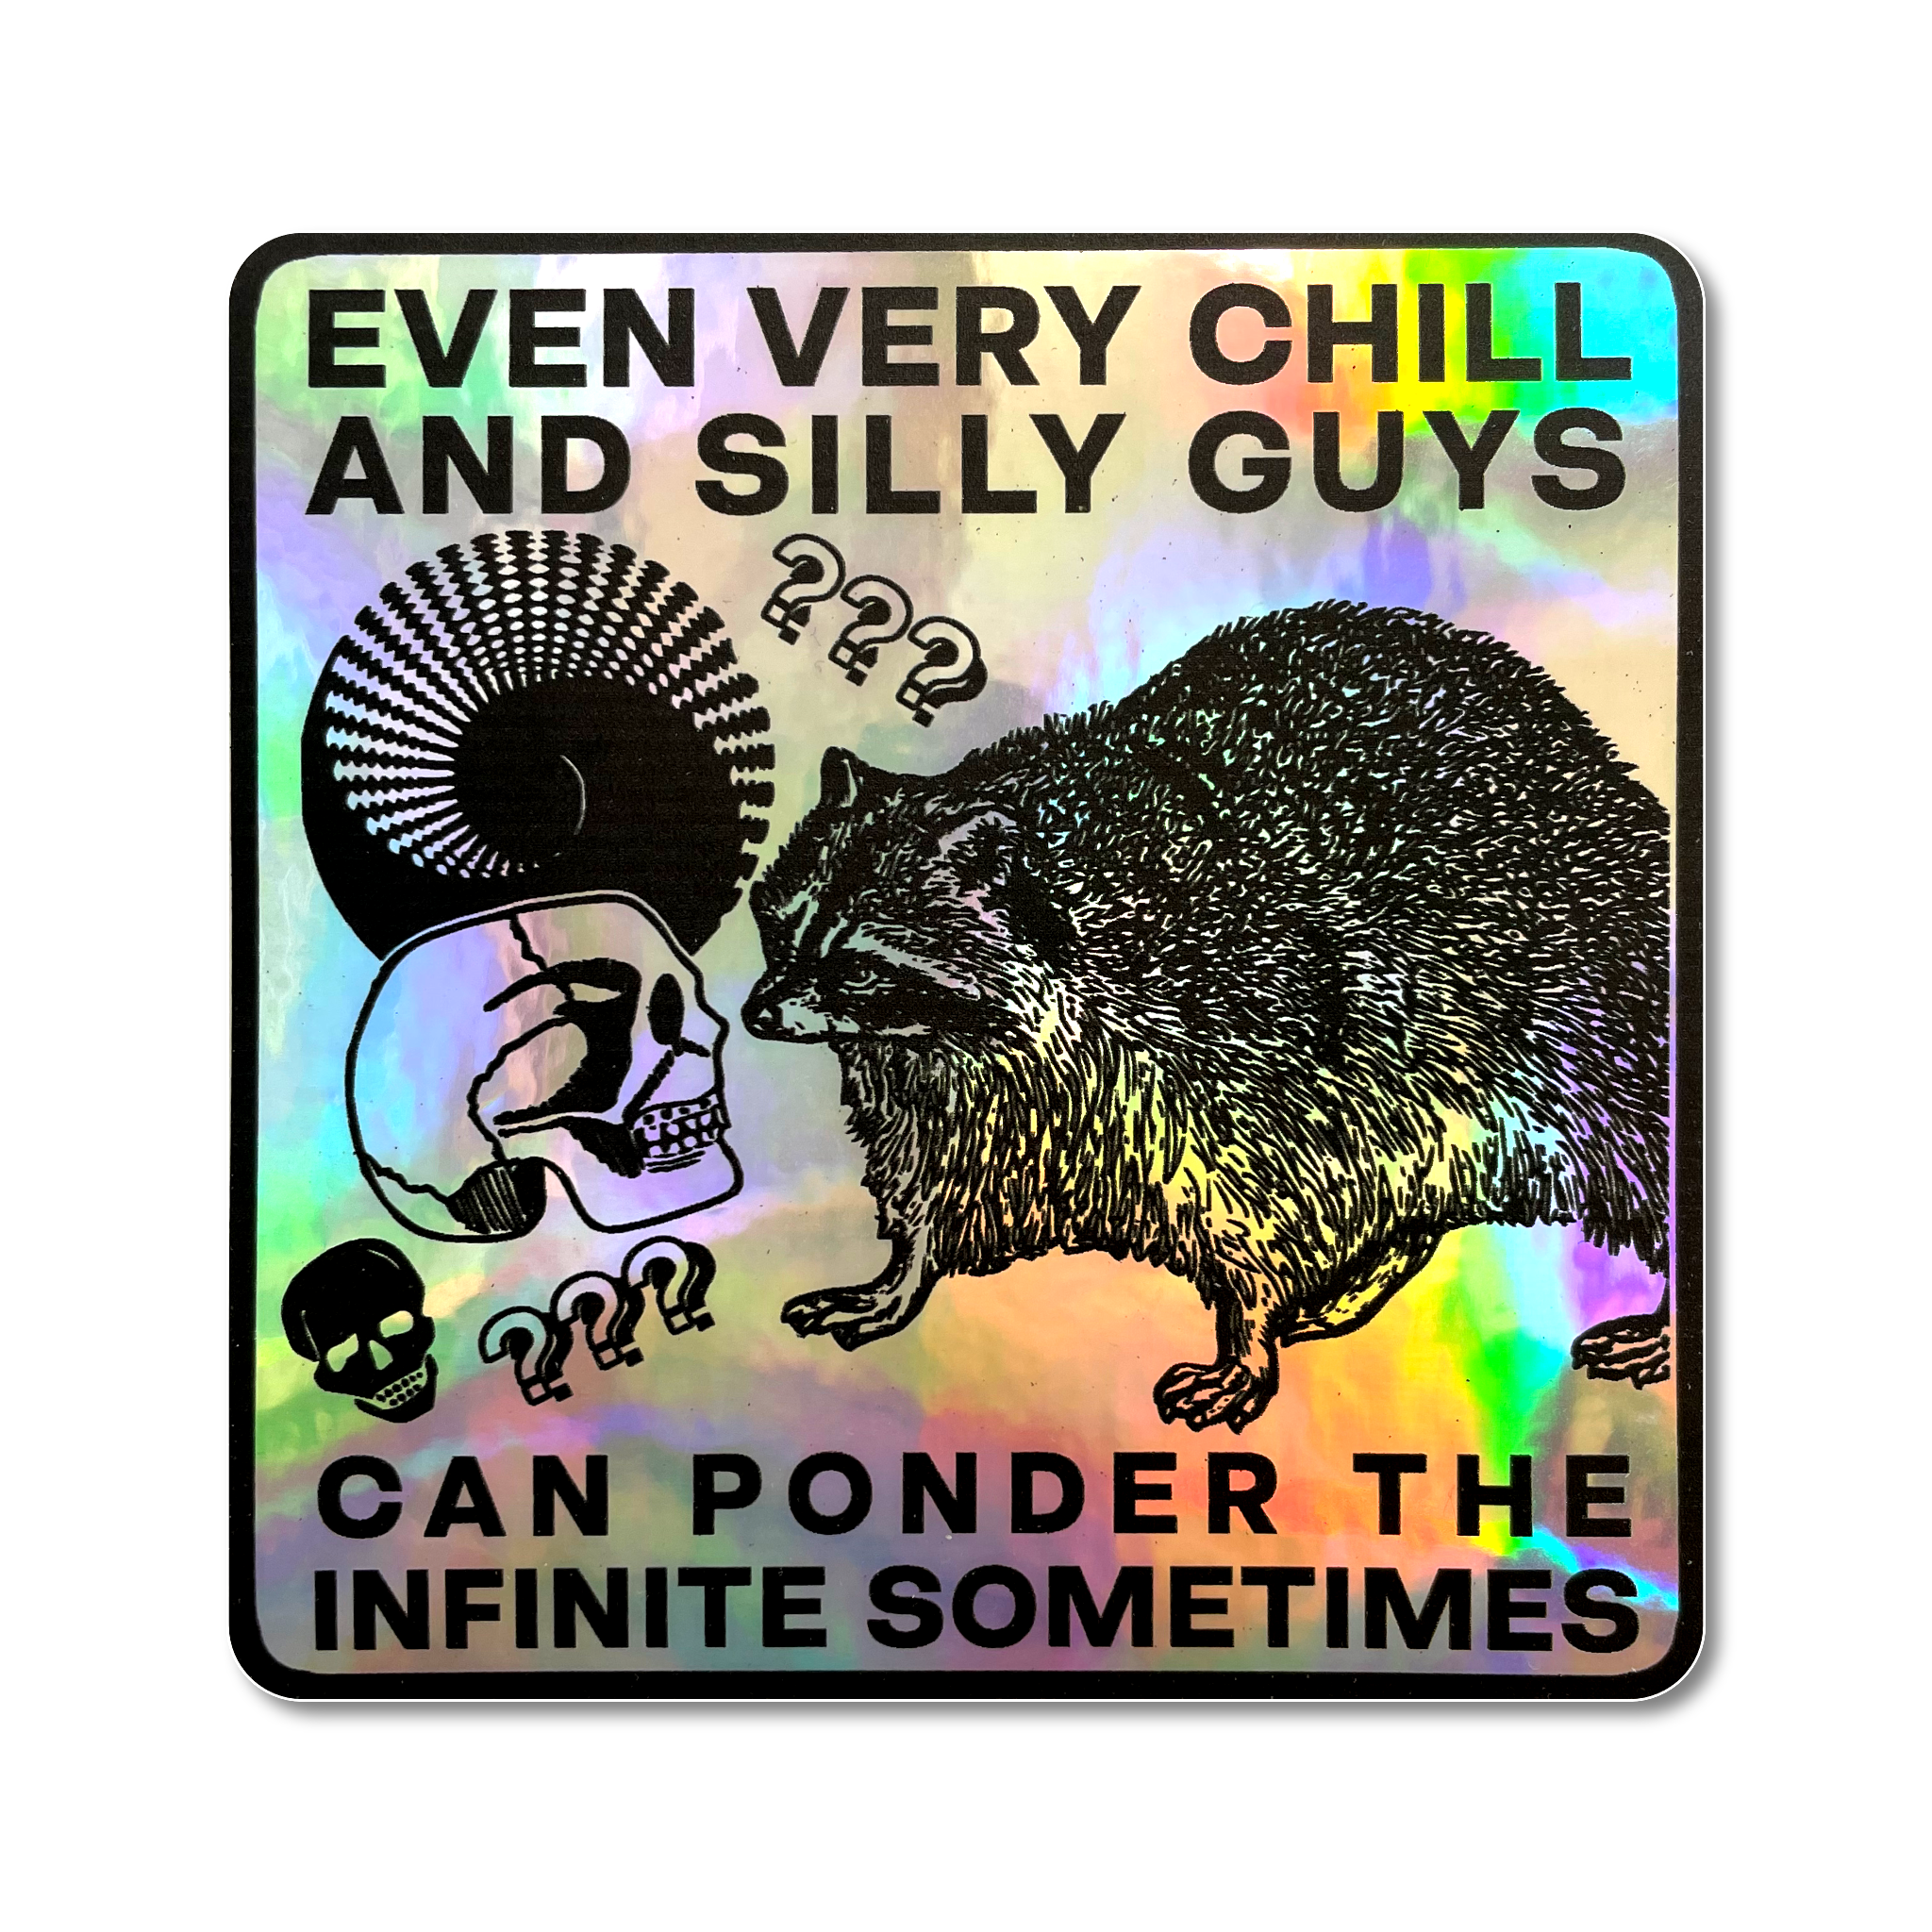 "Ponder the Infinite" Hologram Sticker